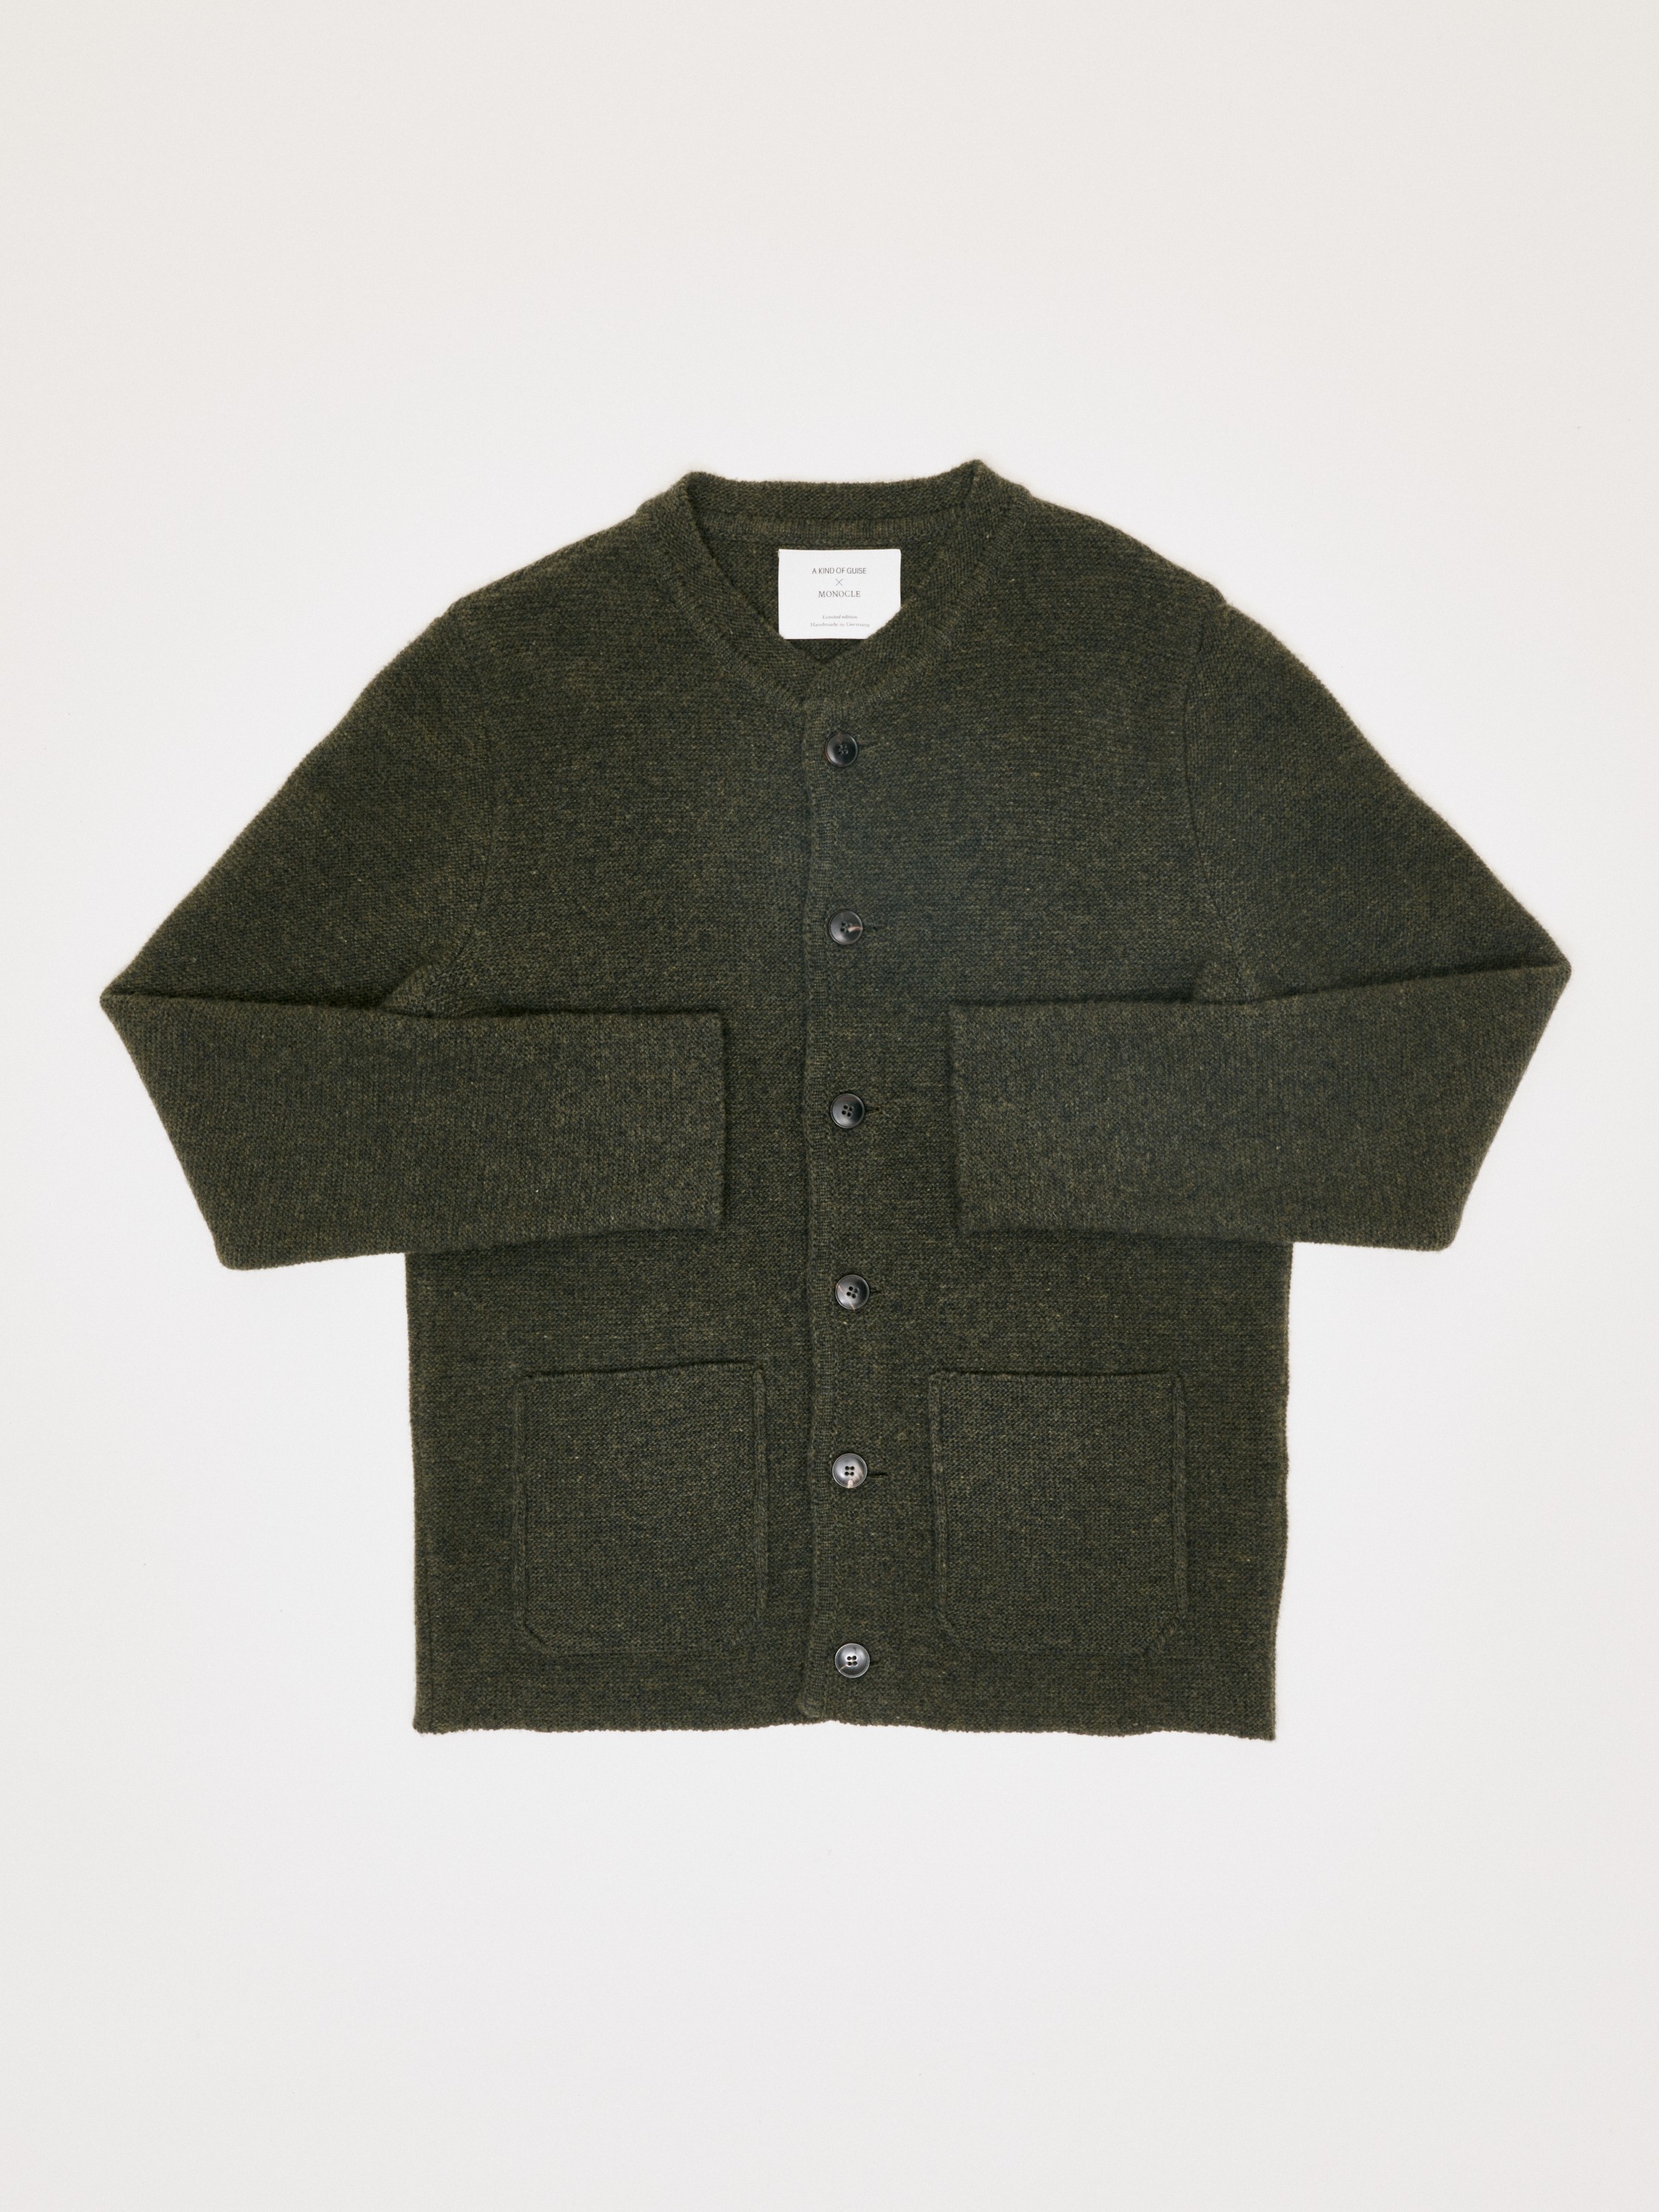 Janker jacket - A Kind of Guise - Clothing - Shop | Monocle